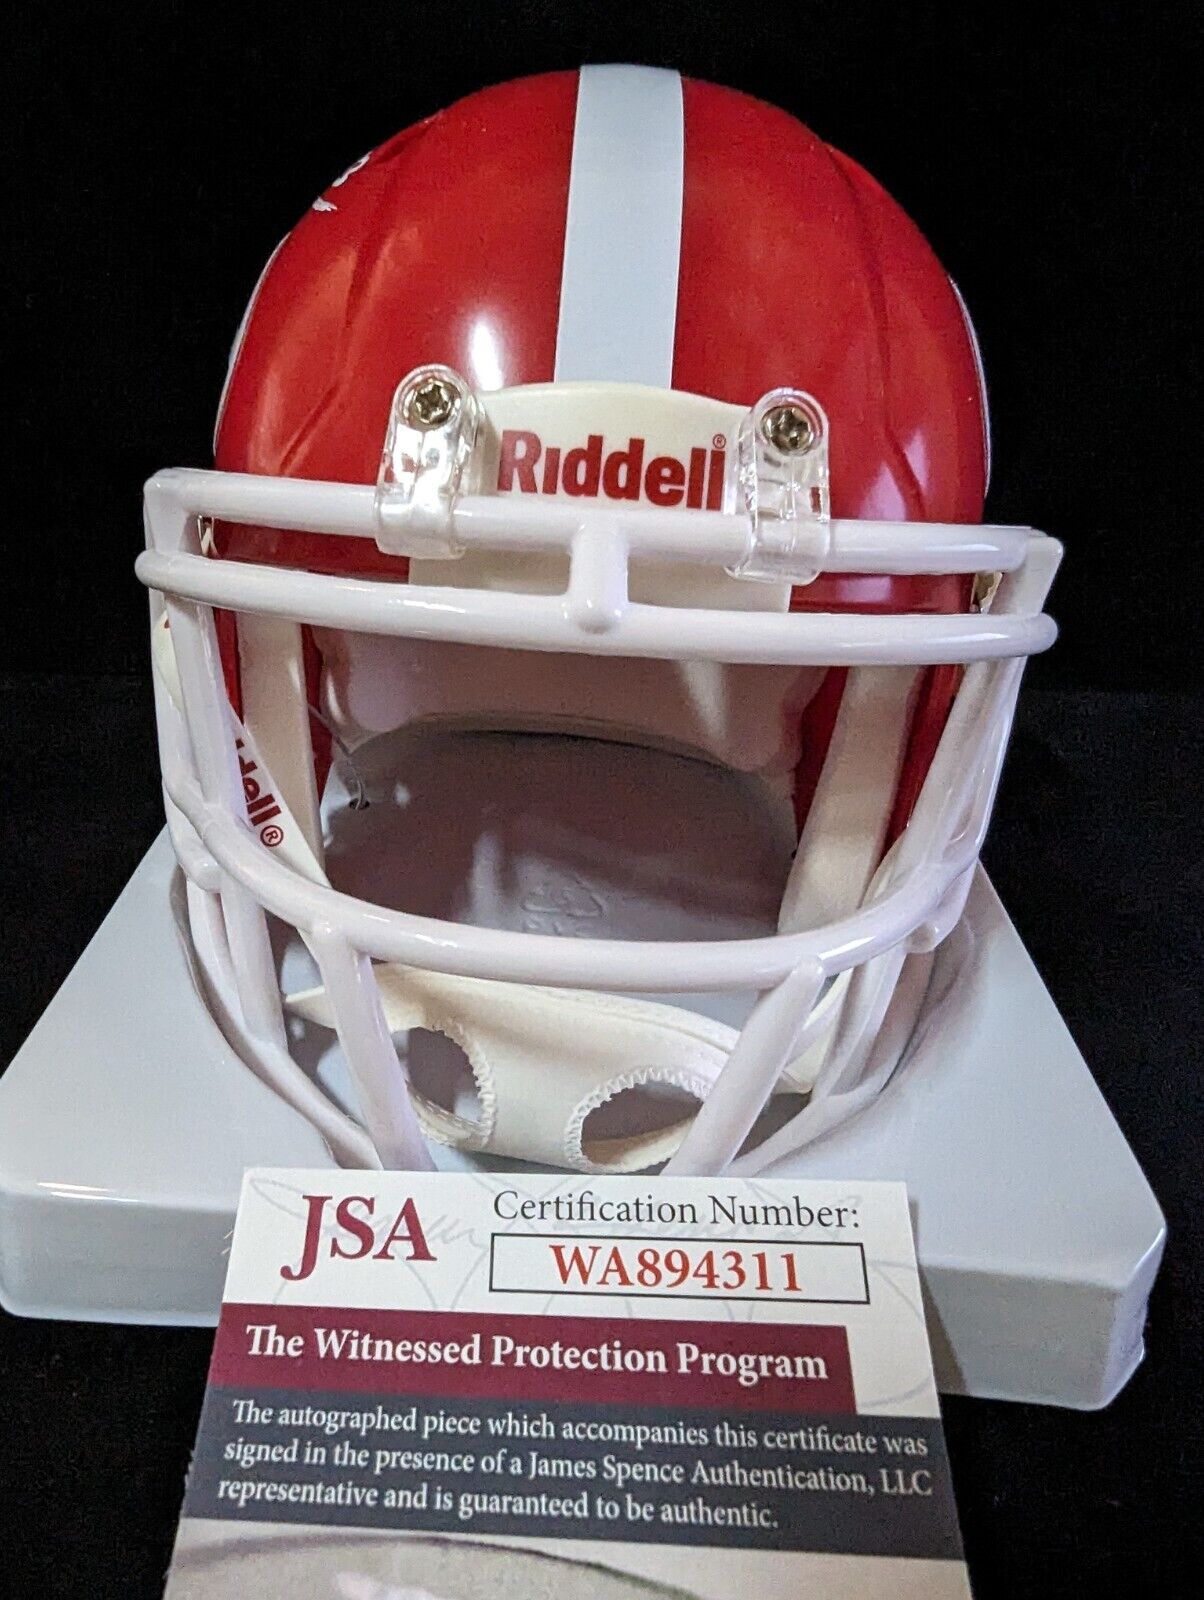 MVP Authentics Georgia Bulldogs Terrell Davis Autographed Signed Mini Helmet Jsa Coa 134.10 sports jersey framing , jersey framing